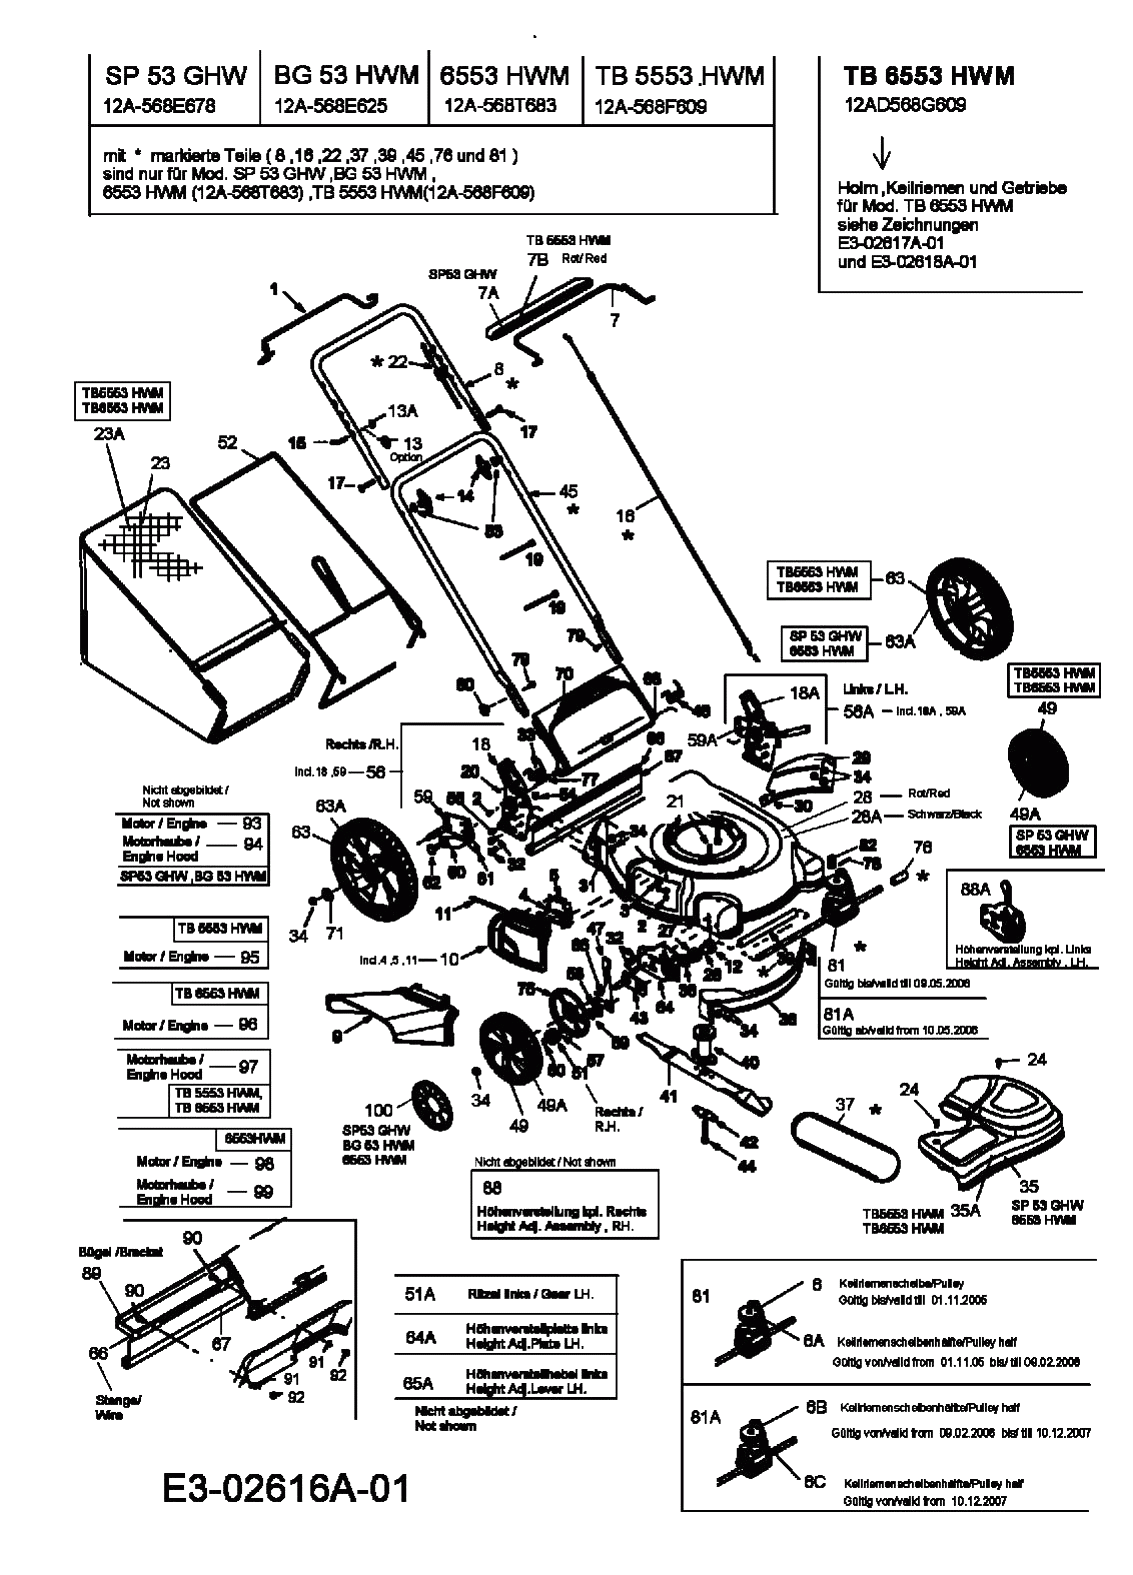 MTD Артикул 12A-568E678 (год выпуска 2006). Основная деталировка